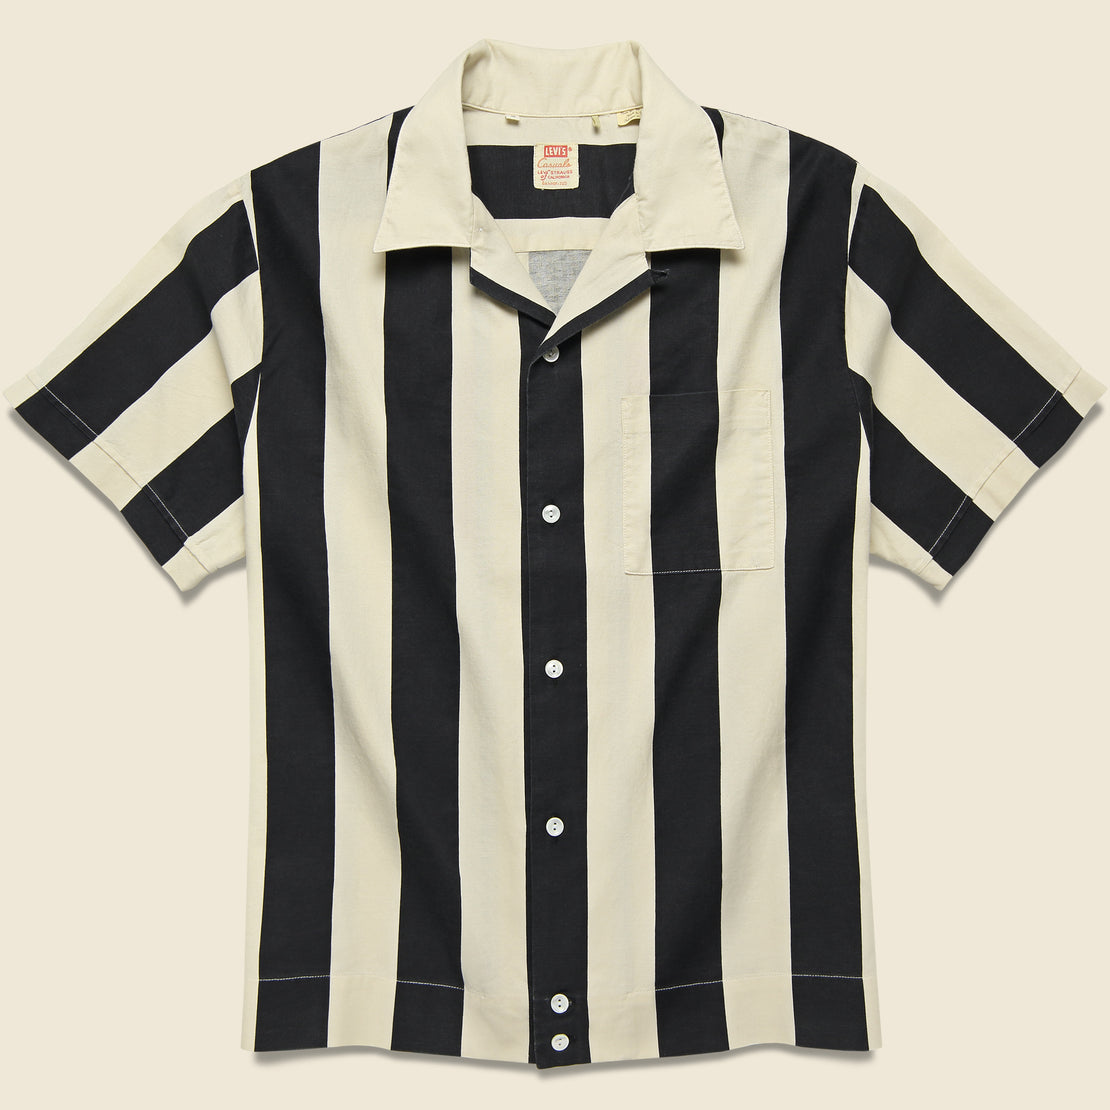 levis vintage clothing shirt